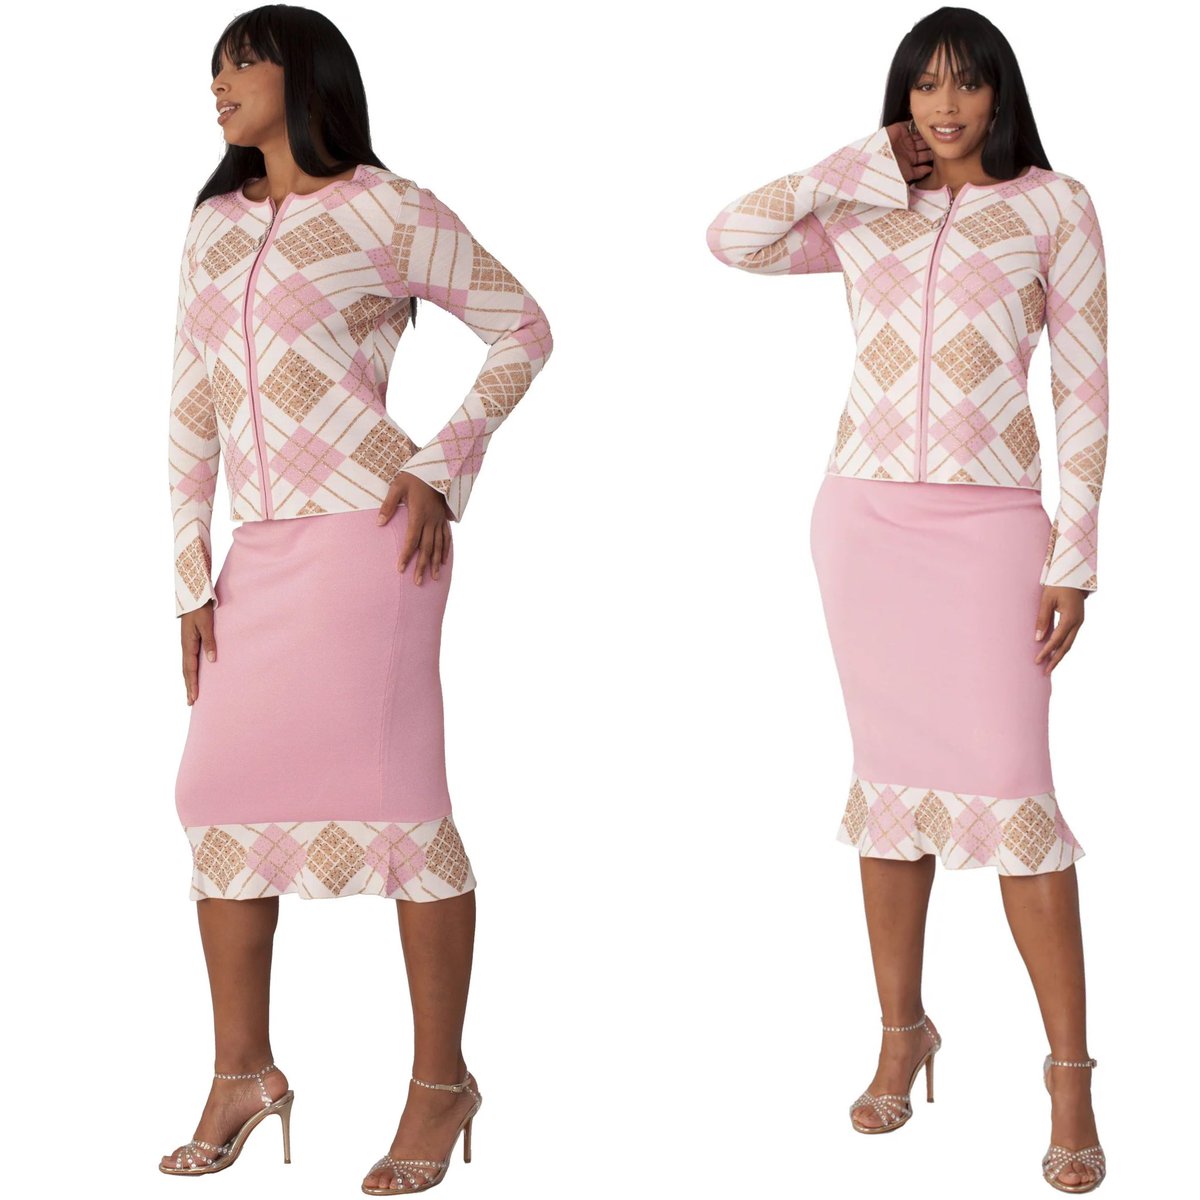 Kayla Knit 5341 Pink Skirt Suit 
divasdenfashion.com/products/kayla… 

#DivasDenFashion #KaylaKnit #pink #printknit #knitskirtsuit #Knitfashion #rufflehem #goldtrim #bellsleeves #twotone #luxeknit #coutureknit #skirtsuit #knitcouture #curvygirlsrock #churchfashions #luxefashion #petitegirls